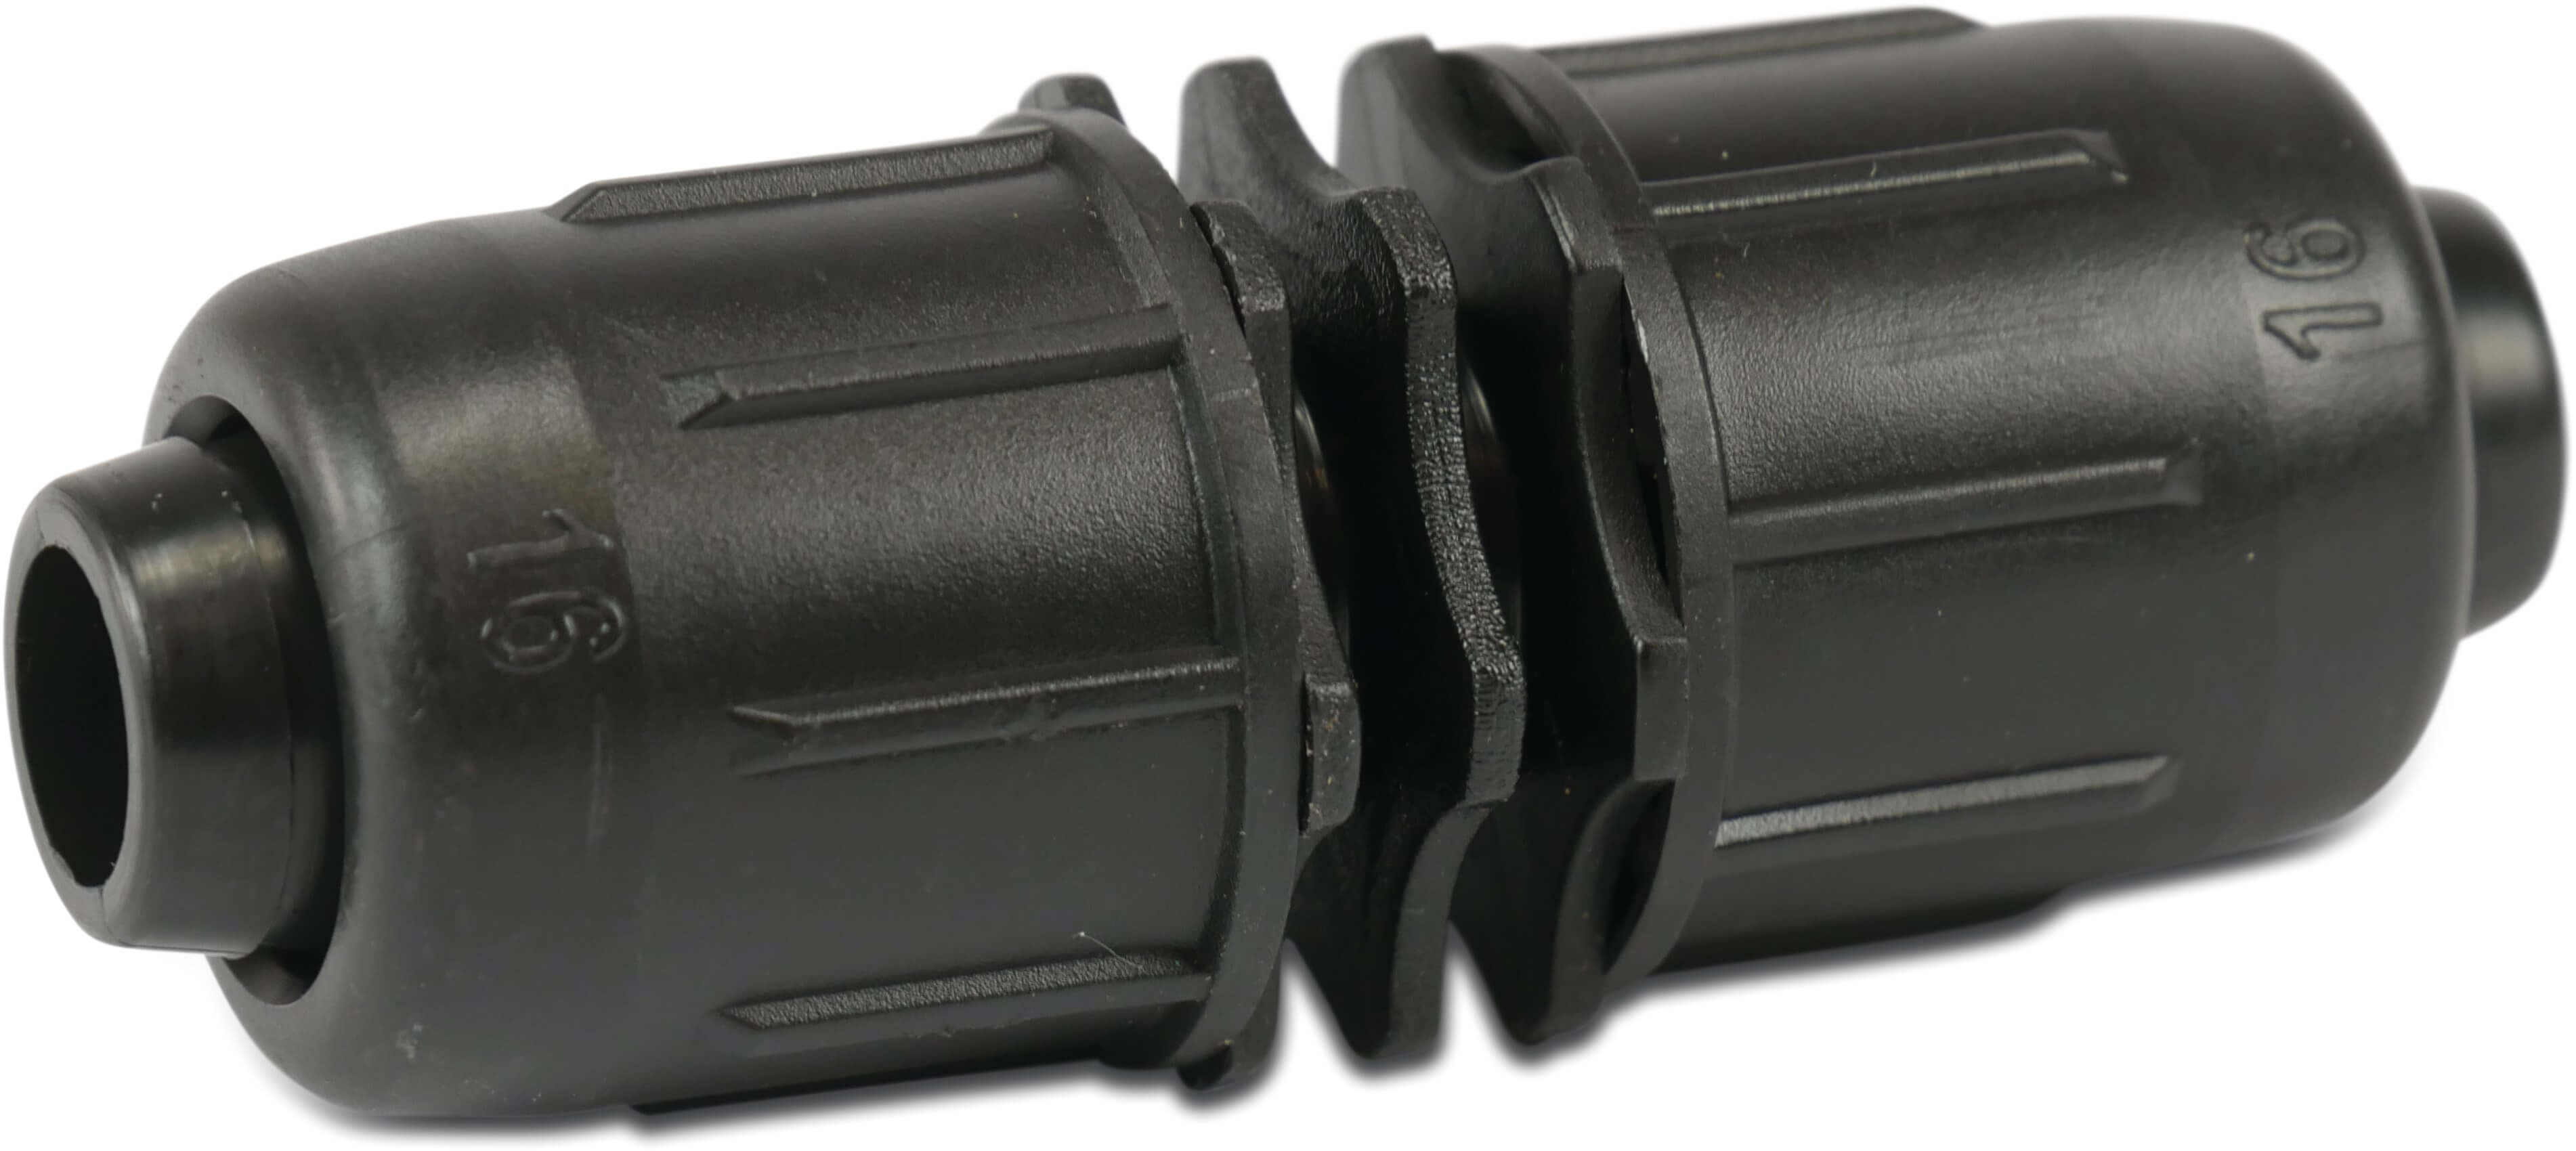 Rak kontakt PP 16 mm lås 4bar svart type Quick joint